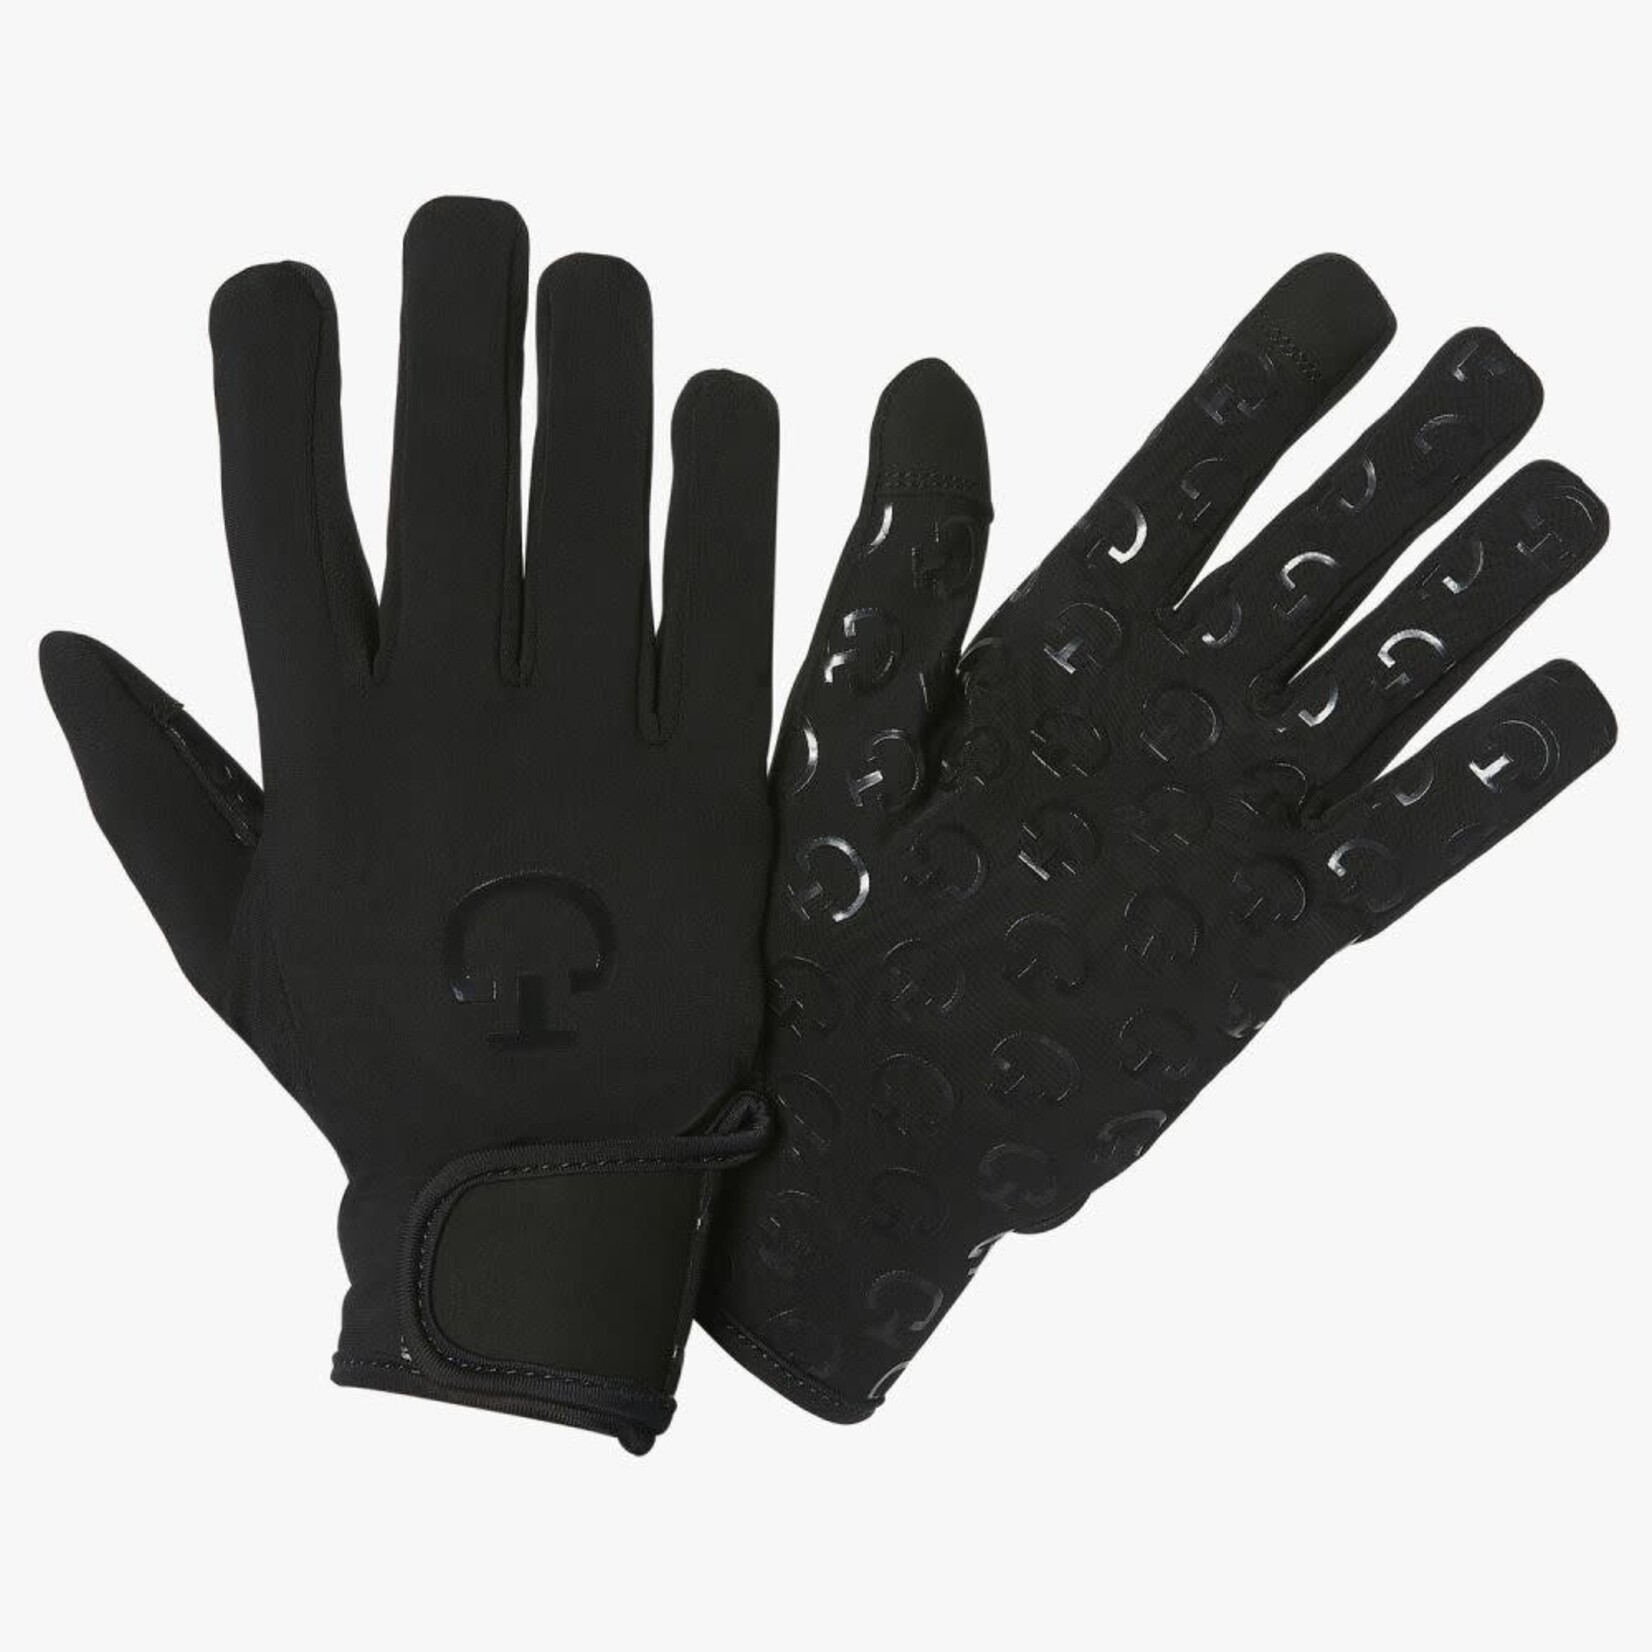 Cavalleria Toscana Cavalleria toscana winter gloves black